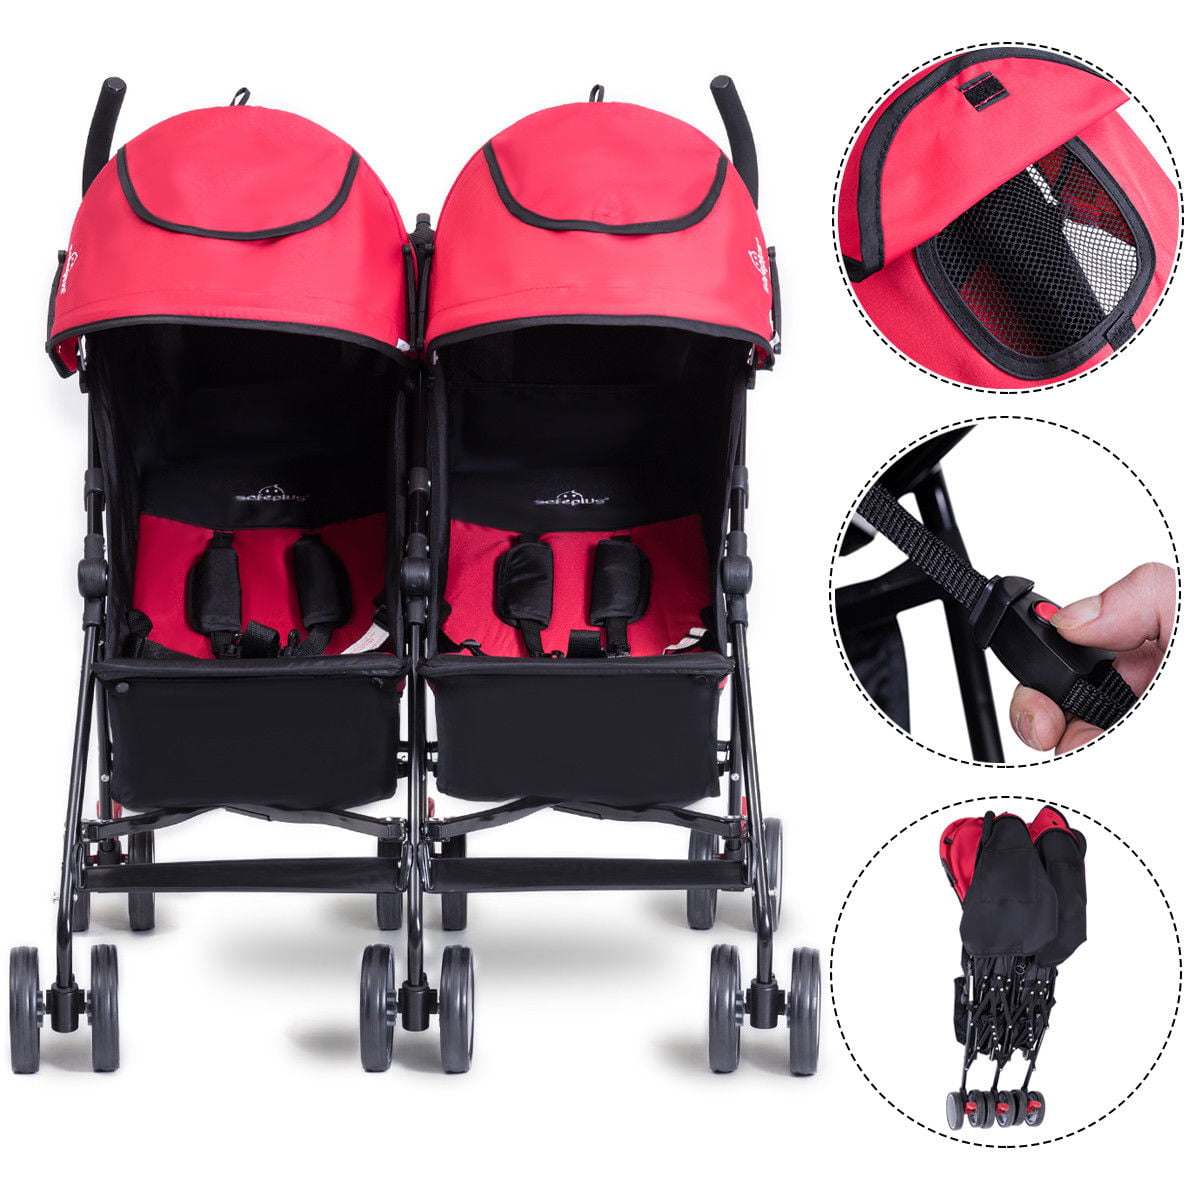 safeplus double stroller instructions